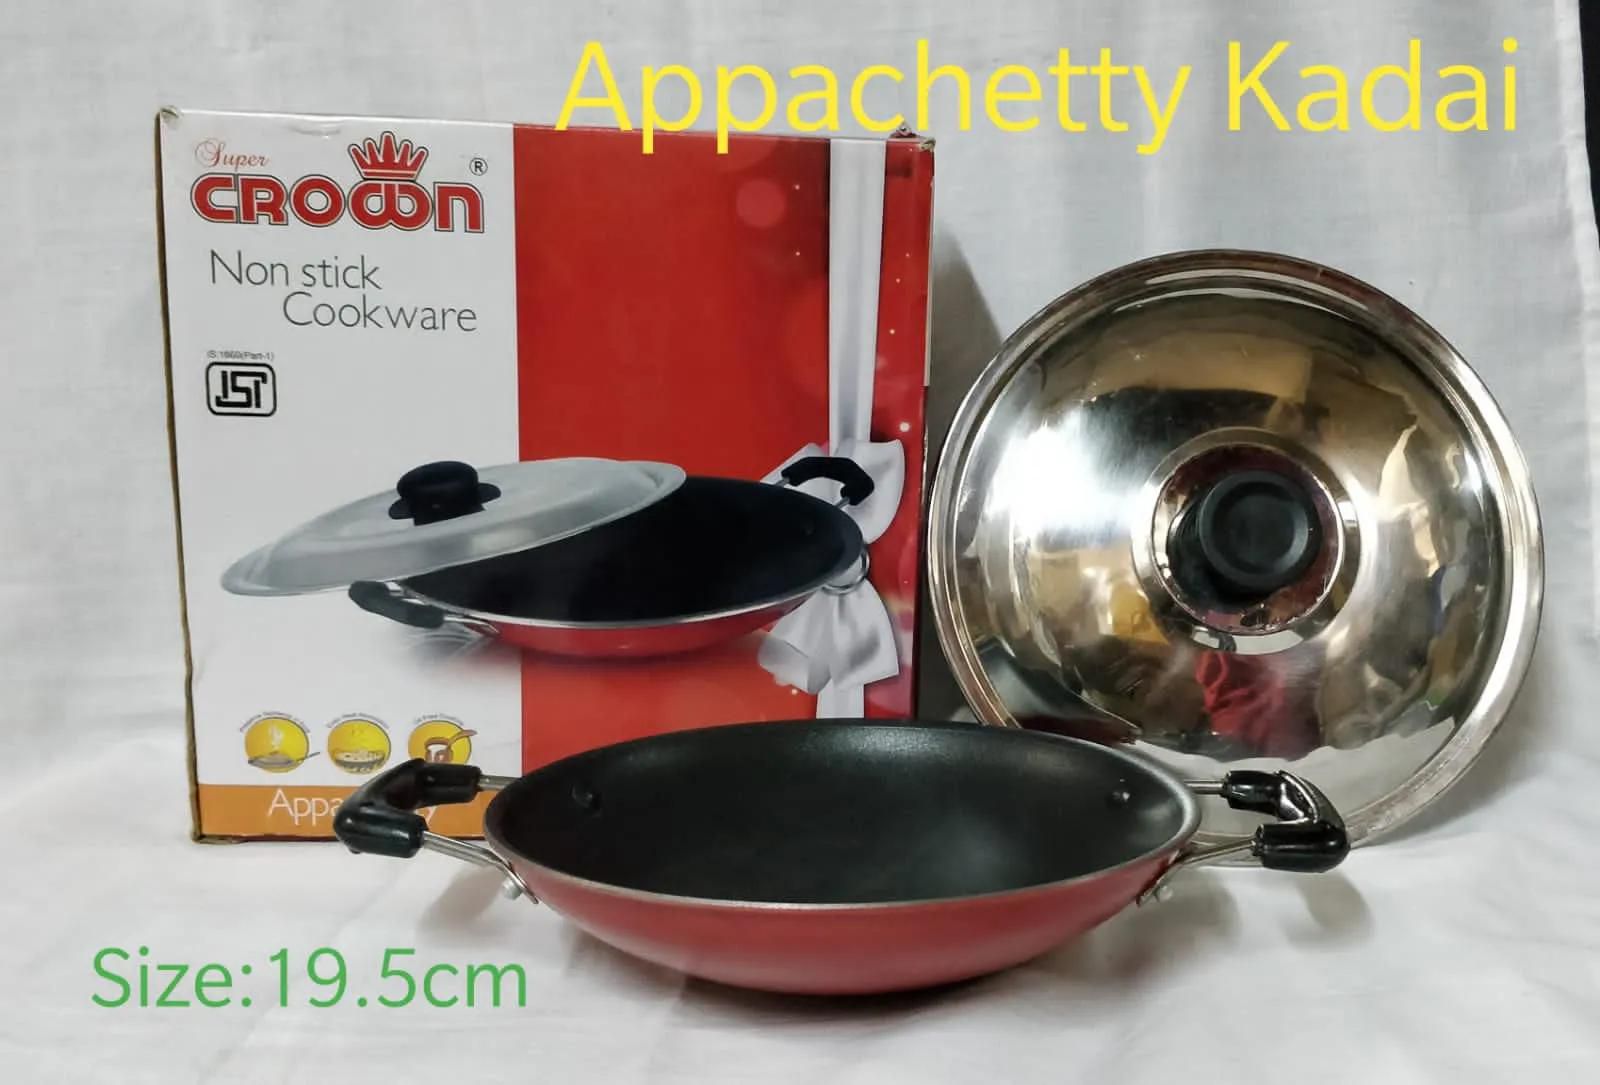 19.5 cm Kitchen Crown Non-Stick Appachetty Kadai with Stainless Steel Lid